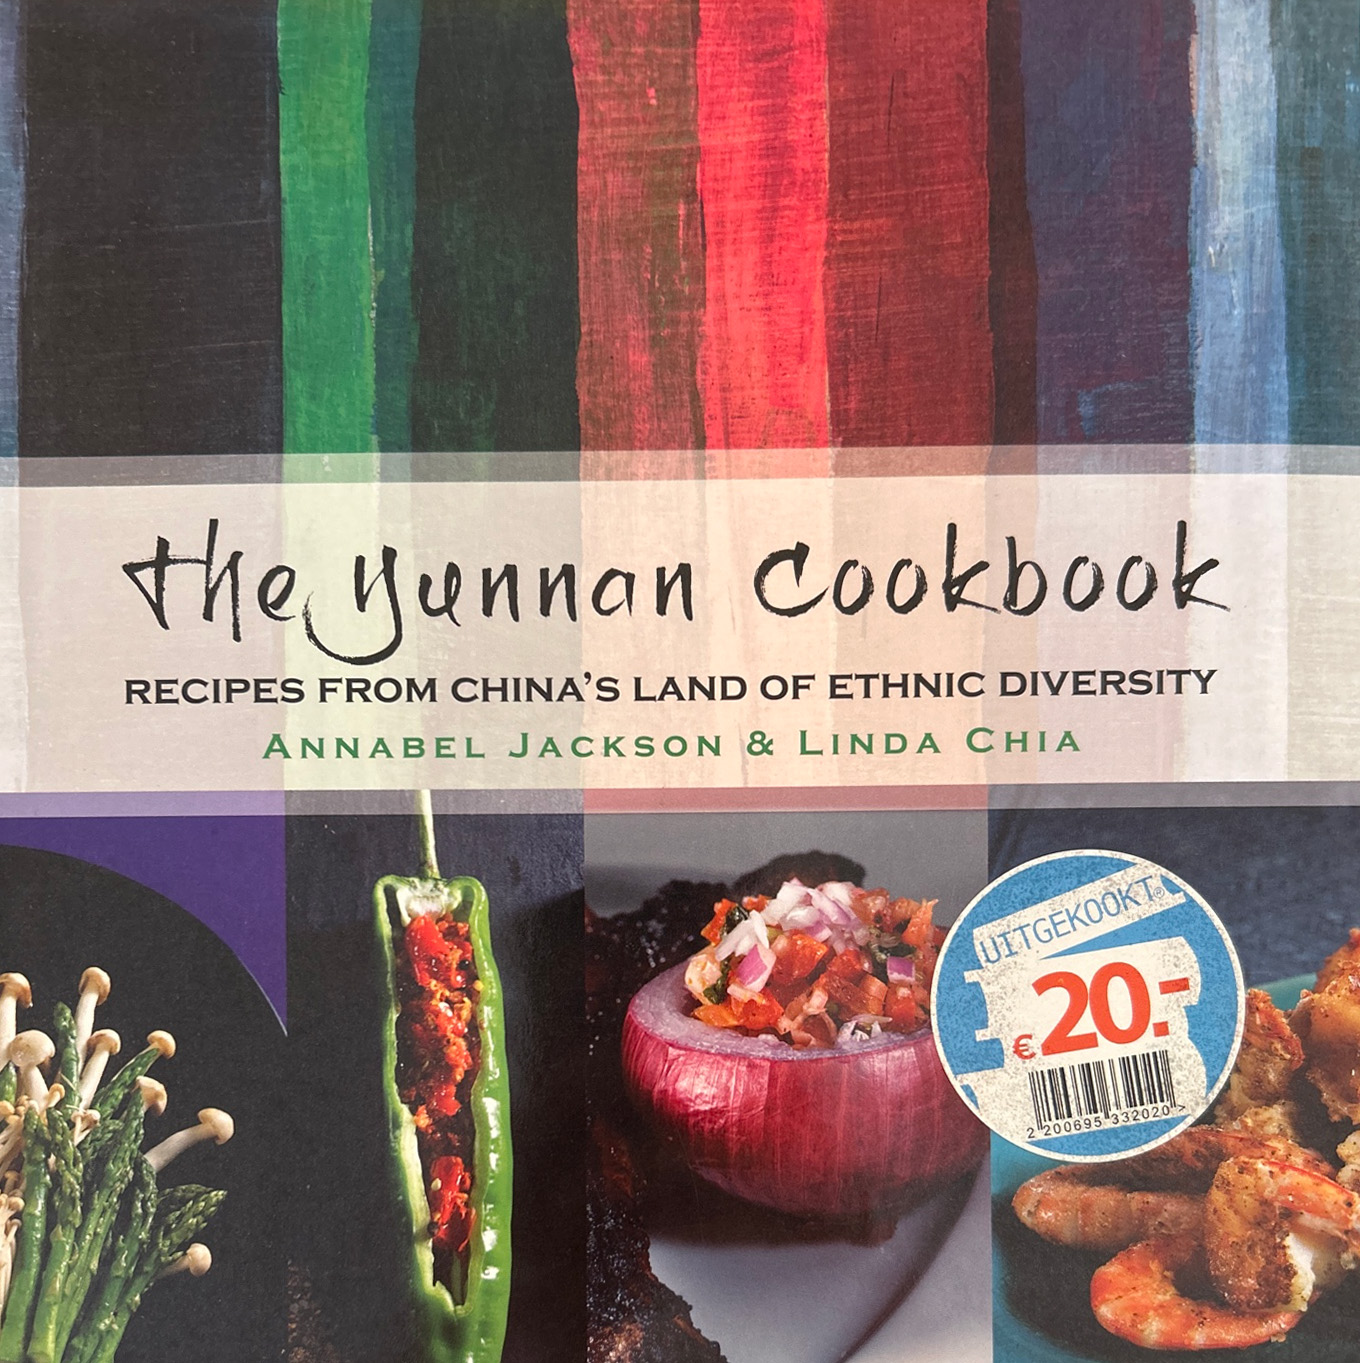 The Yunnan cookbook – Annabel Jackson